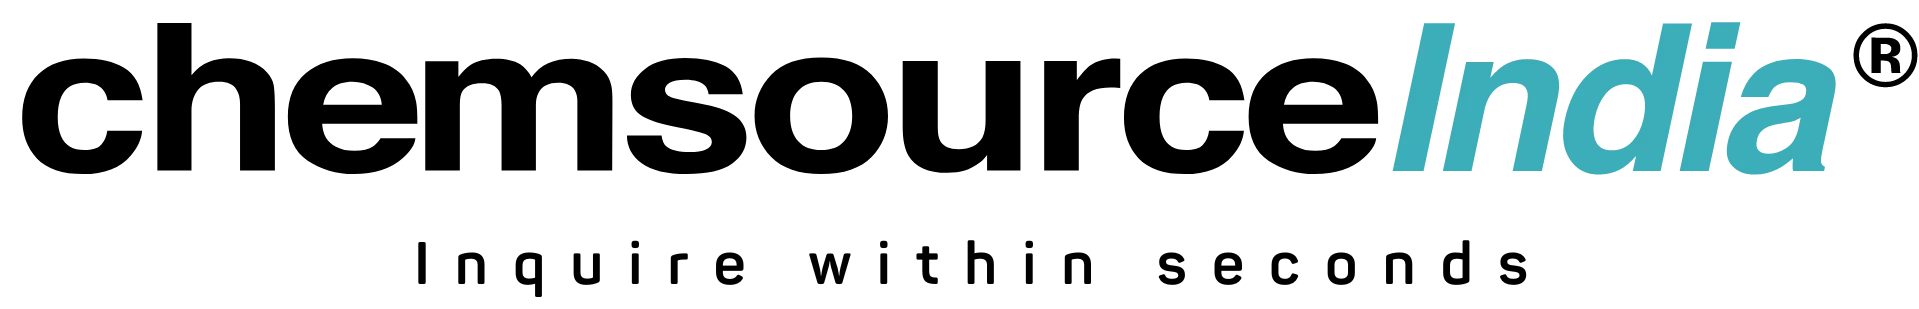 chemsource india logo